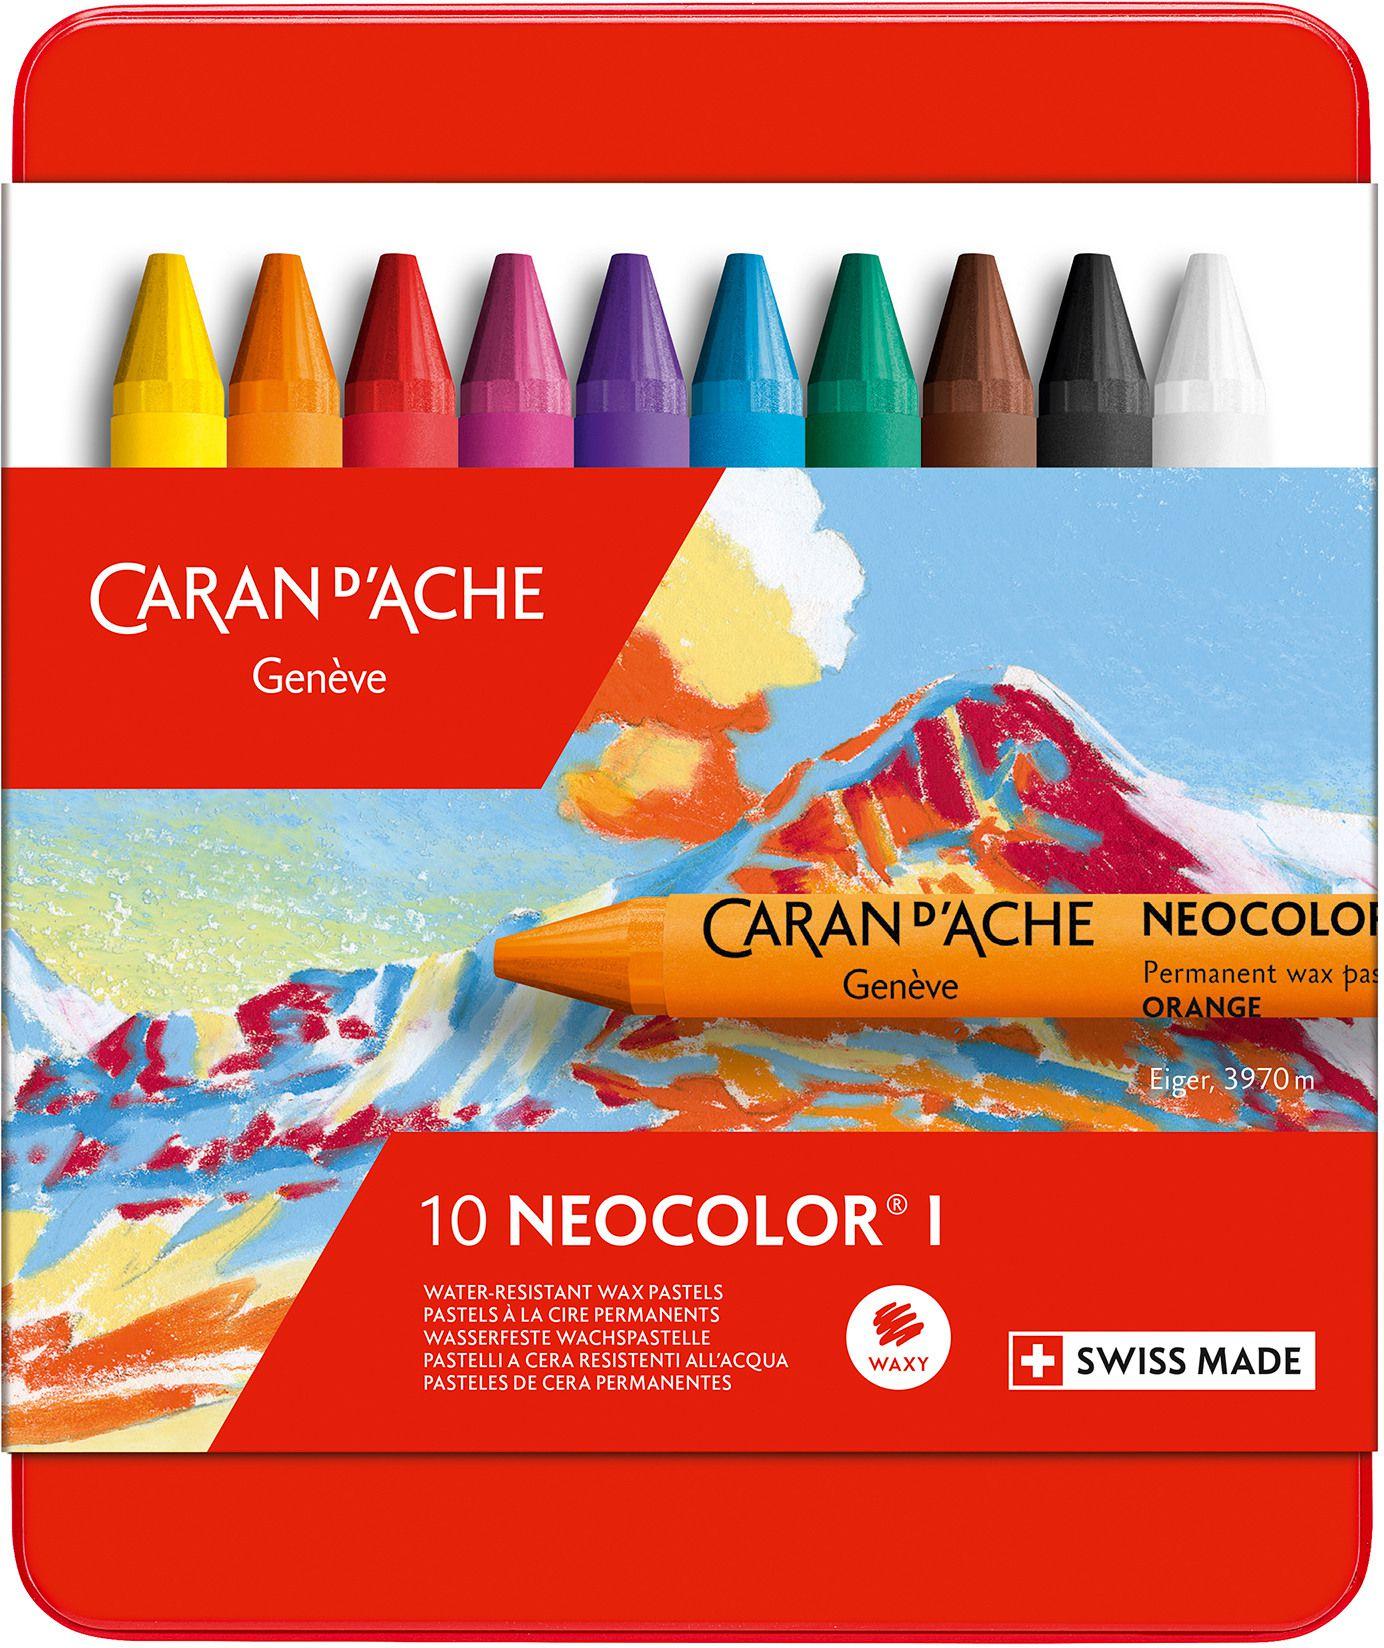 CARAN D'ACHE Genève - Neocolor 1 - Set 10 pastelli a cera resistenti all'acqua